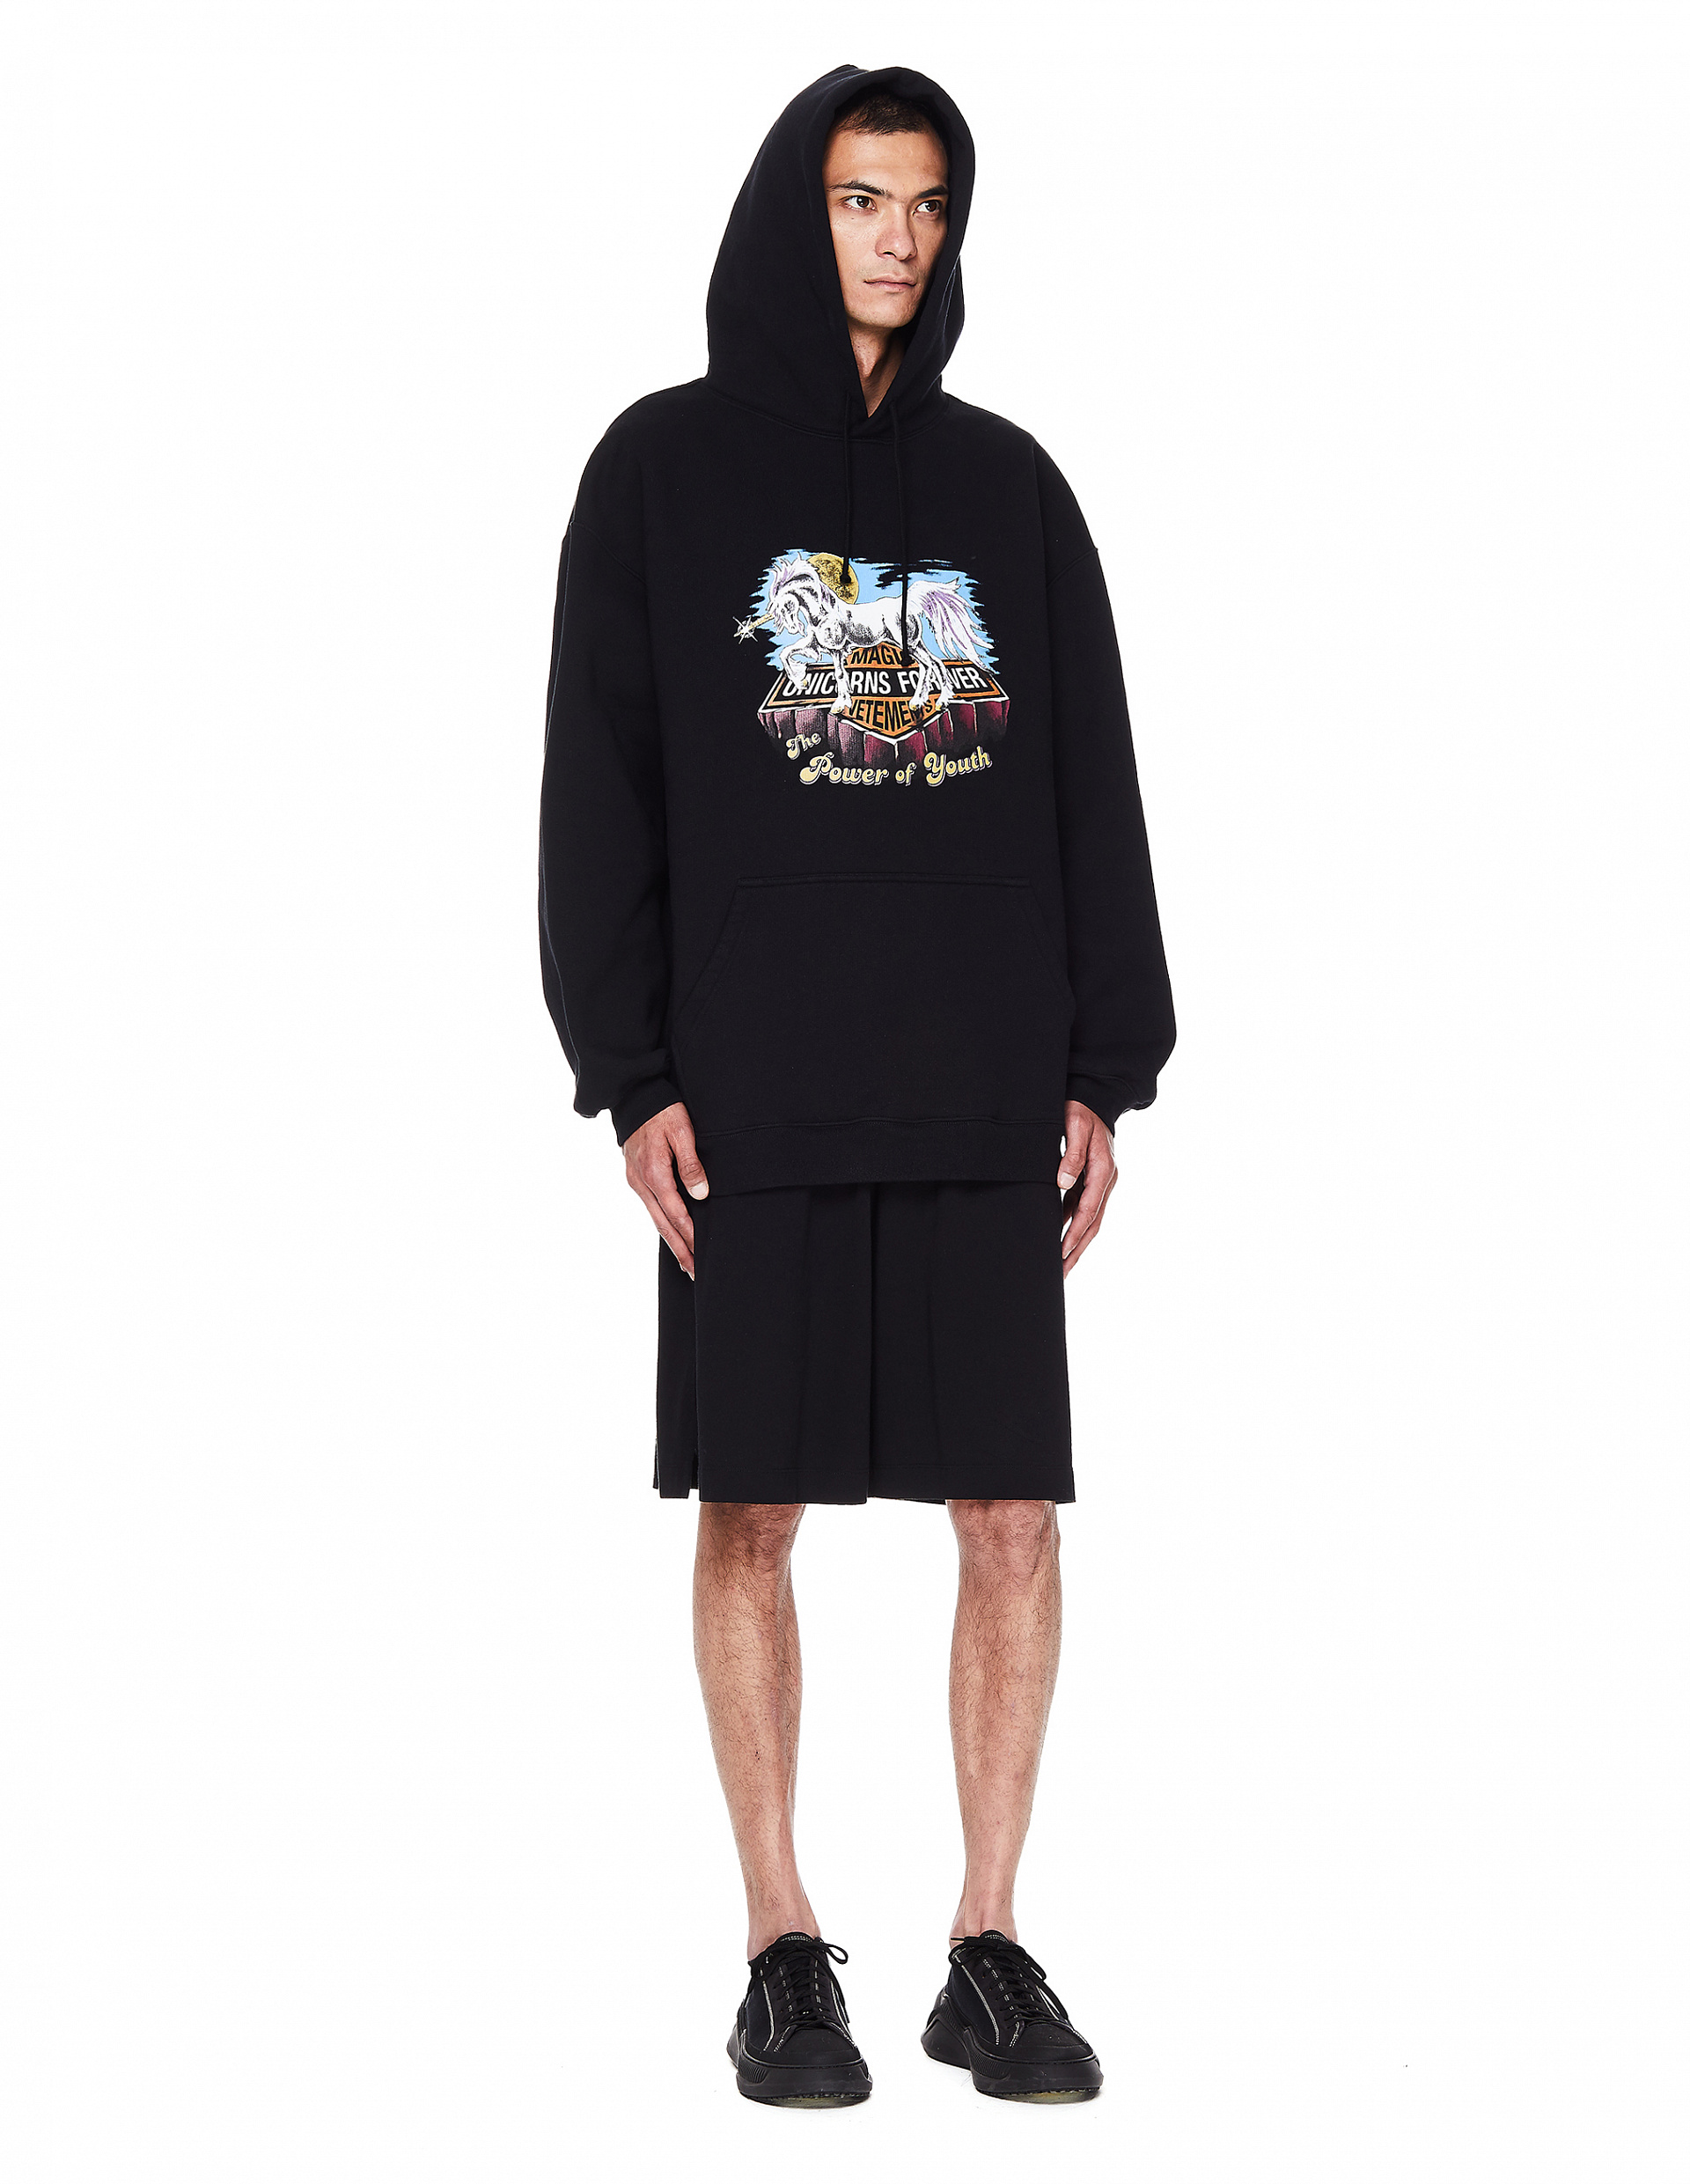 Buy Vetements men black cotton hoodie for $495 online on SVMOSCOW